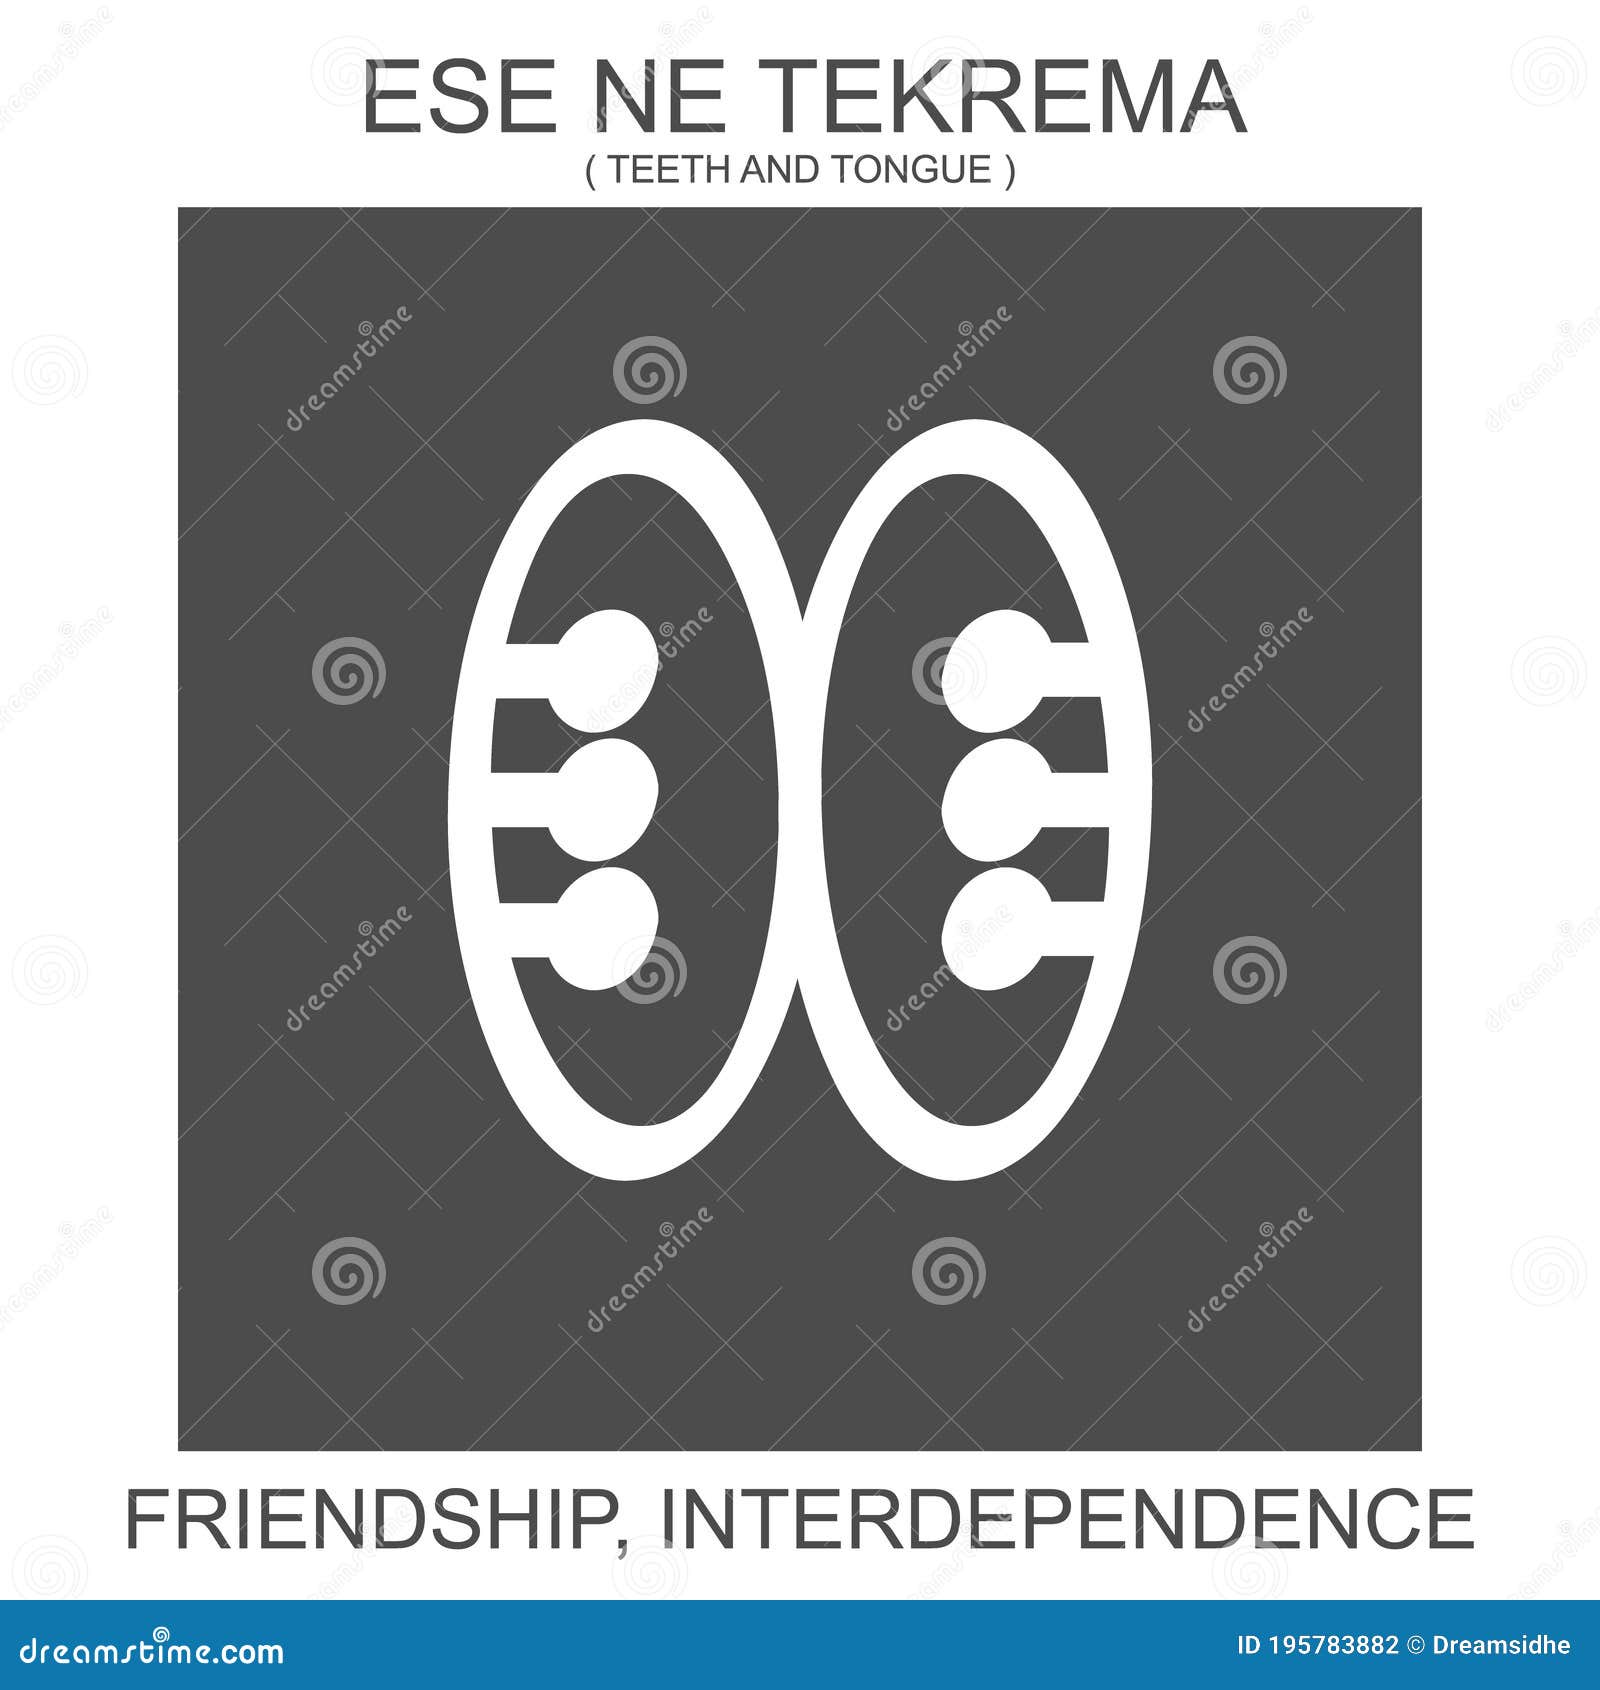 icon with african adinkra  ese ne tekrema.  of friendship and interdependence